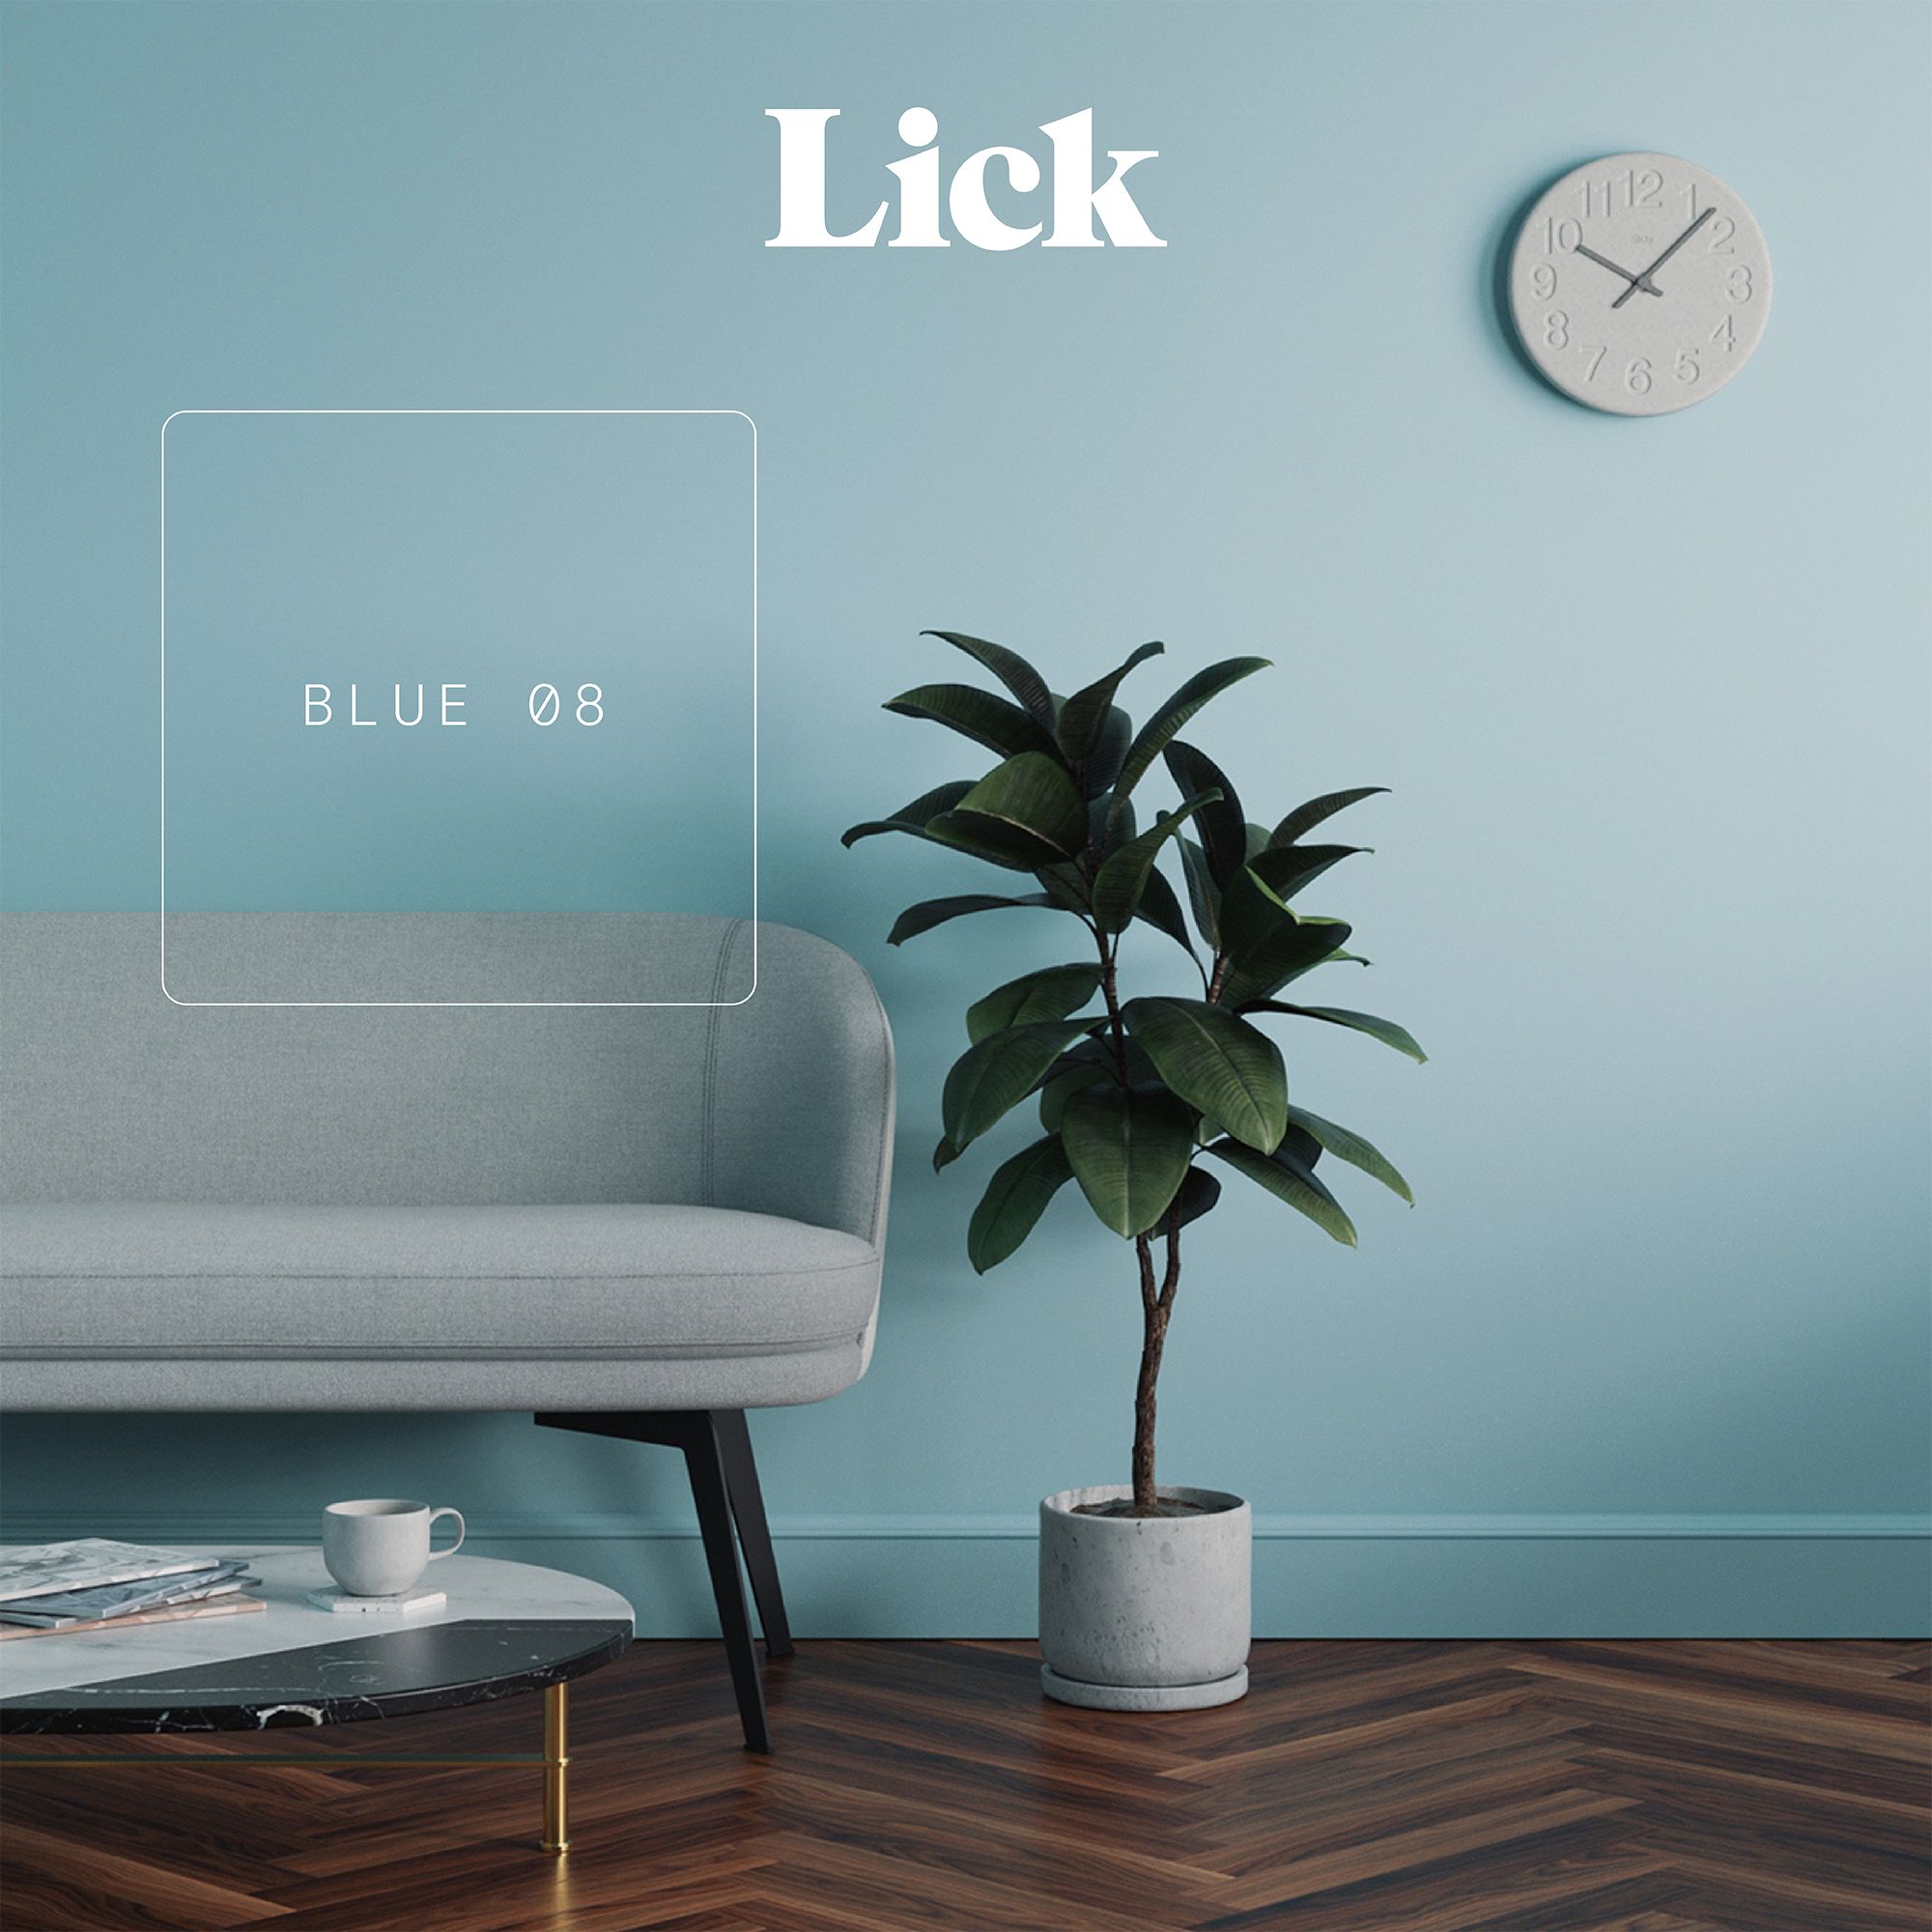 Lick Blue 08 Matt Emulsion paint, 2.5L